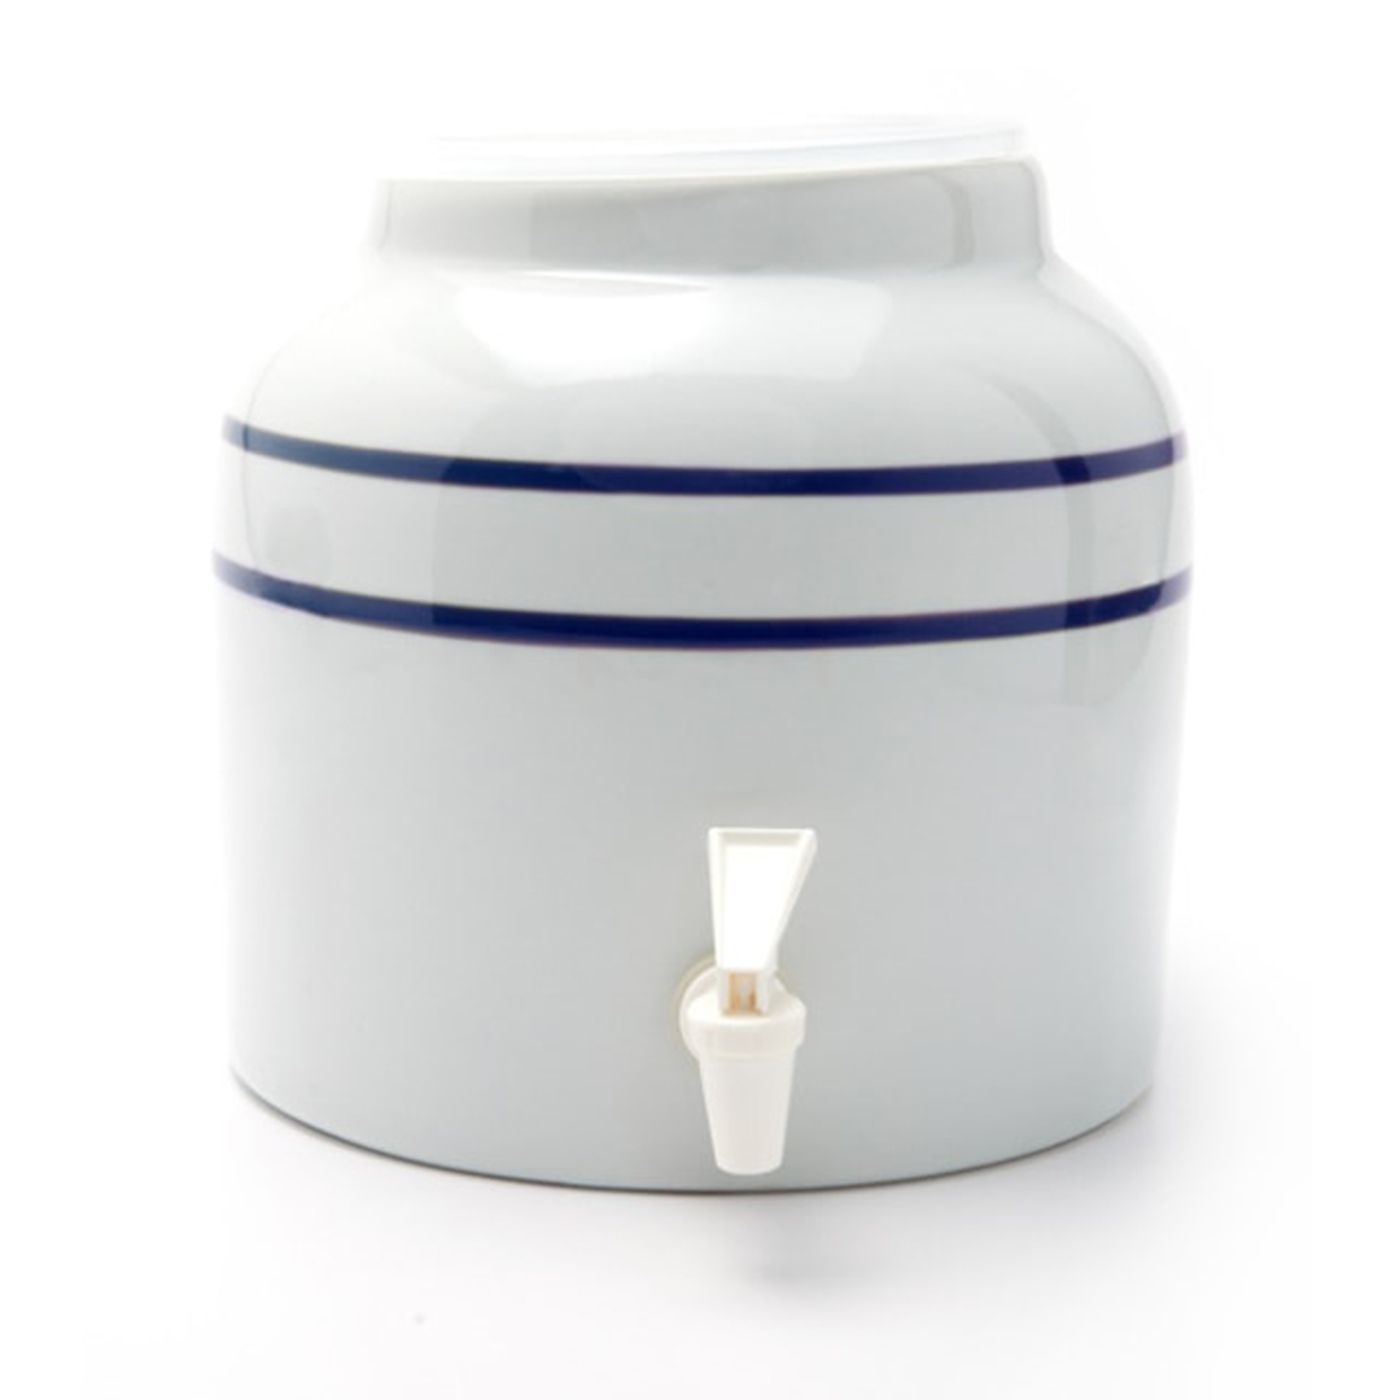 ceramic water dispenser crock with blue stripes